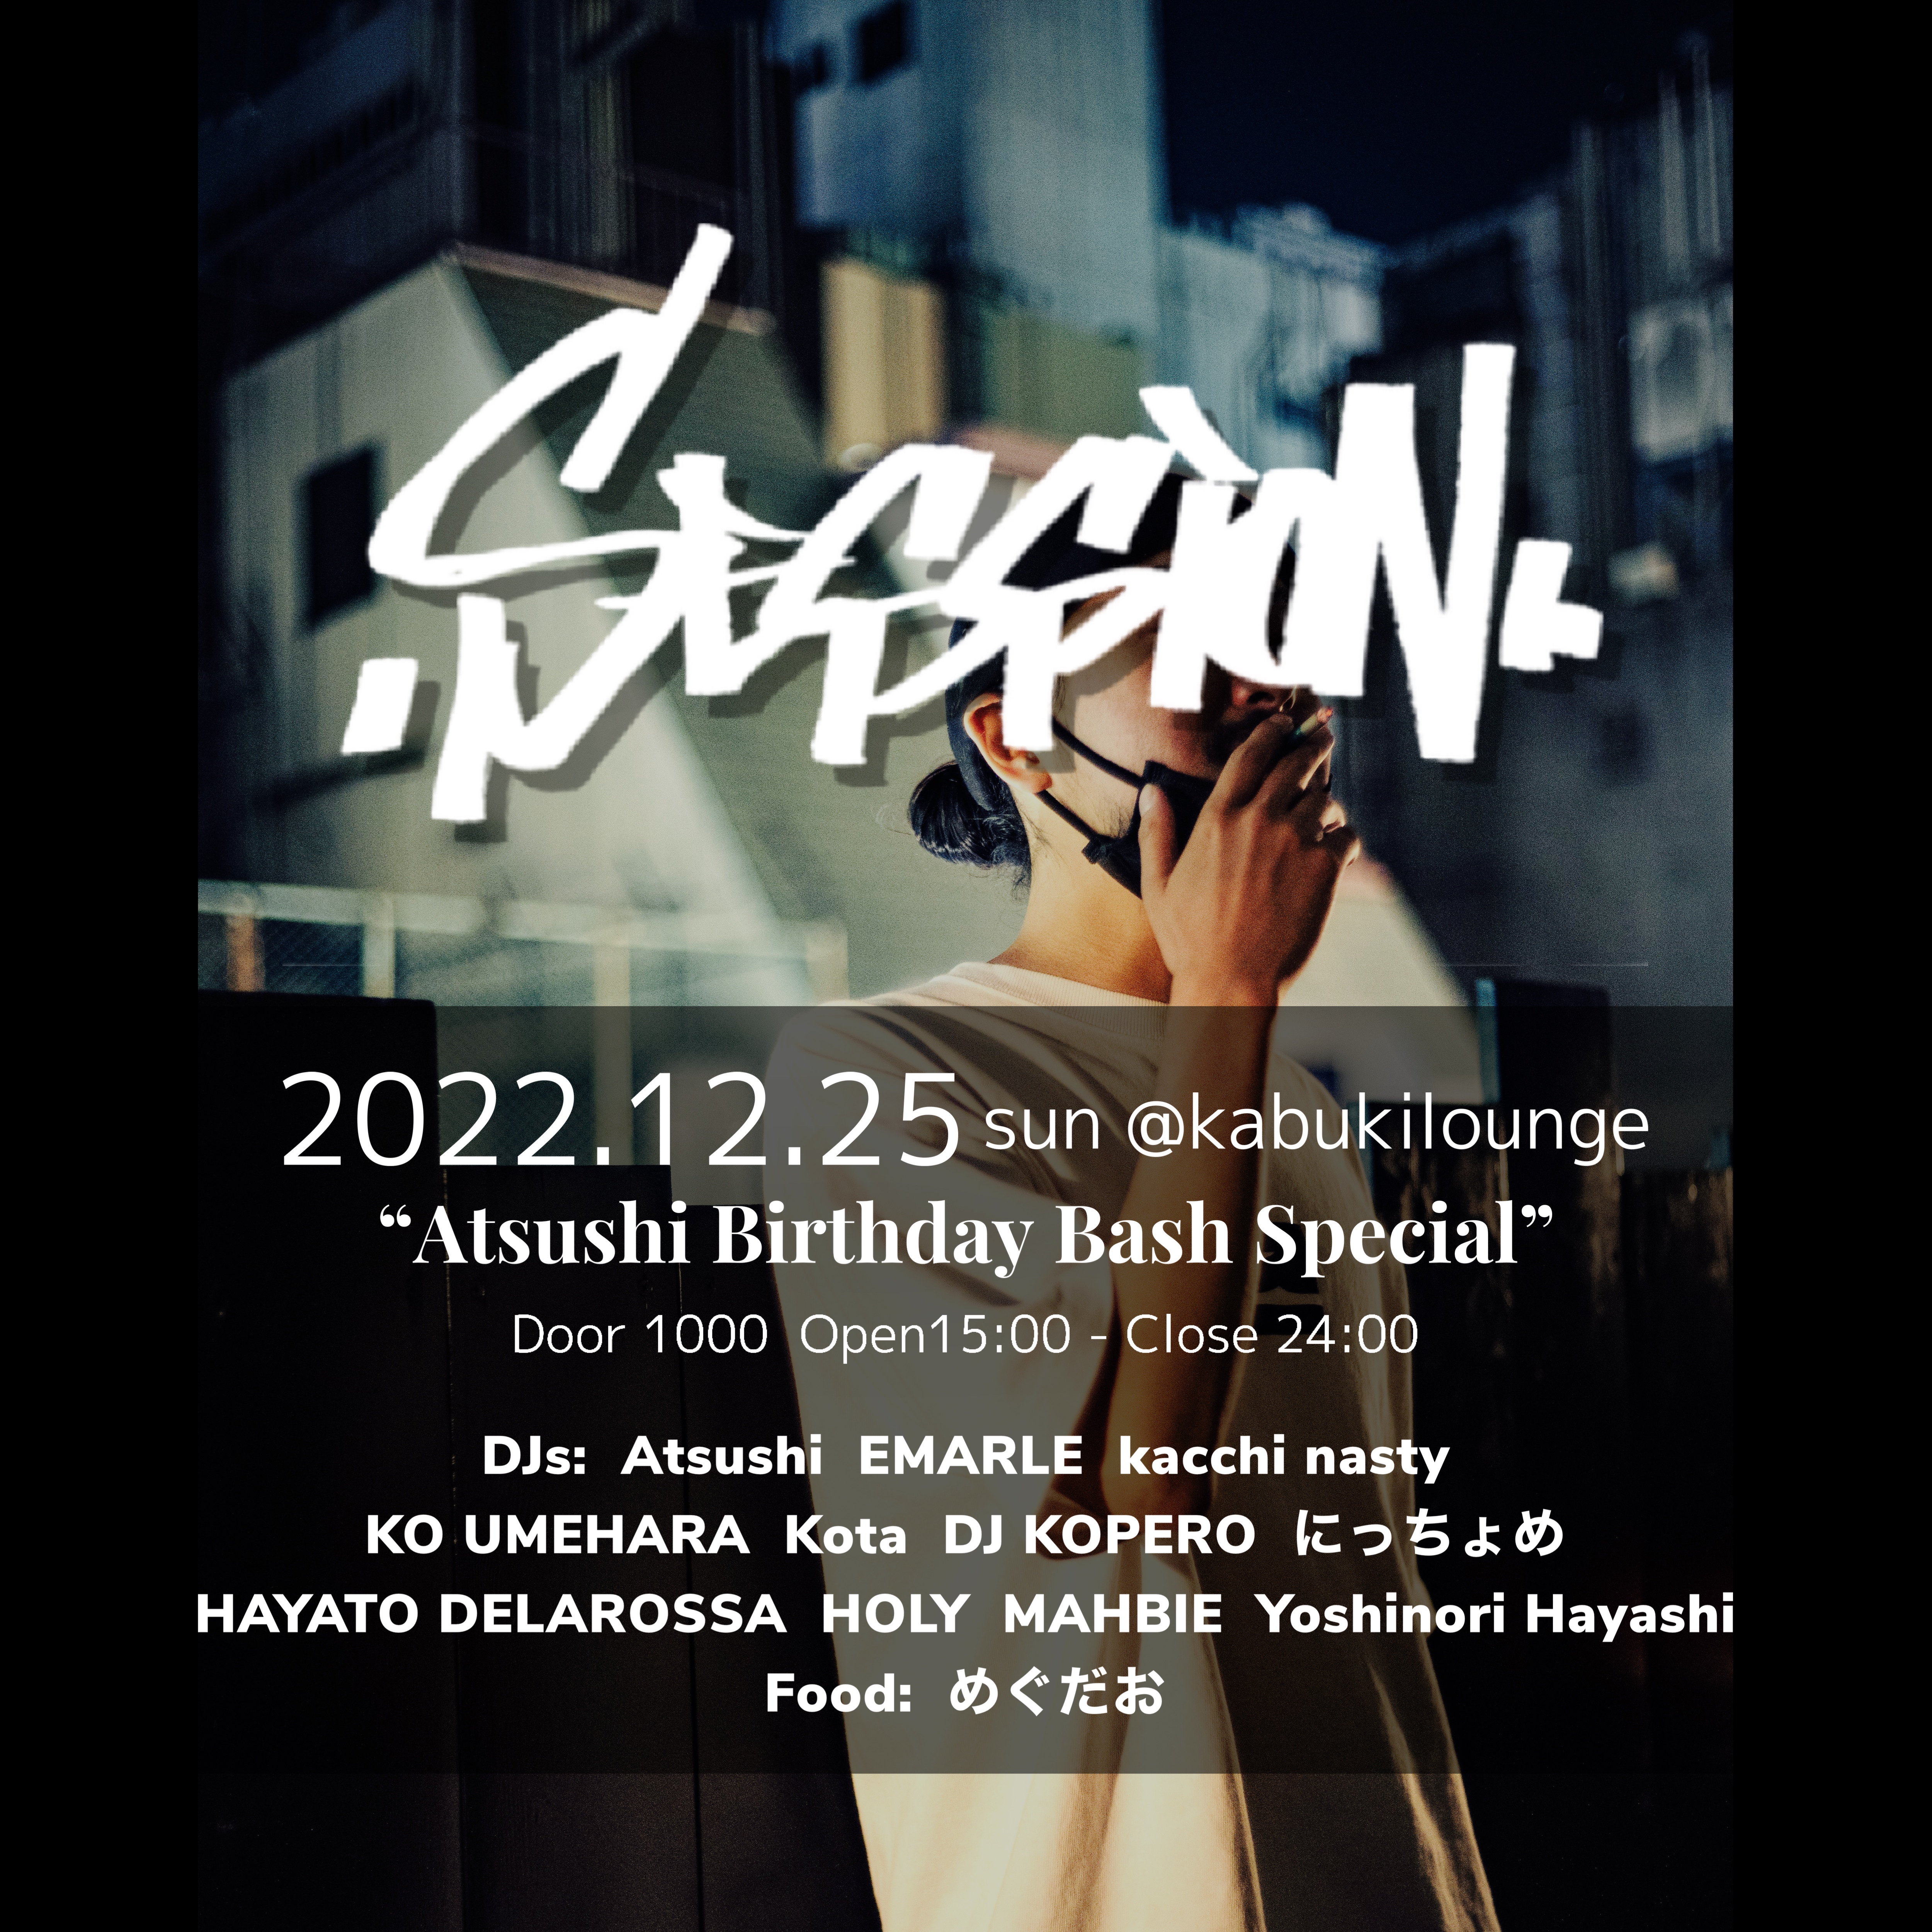 2022.12.25 sun “session” Atsushi Birthday Bash Special @kabukilounge.shinjuku